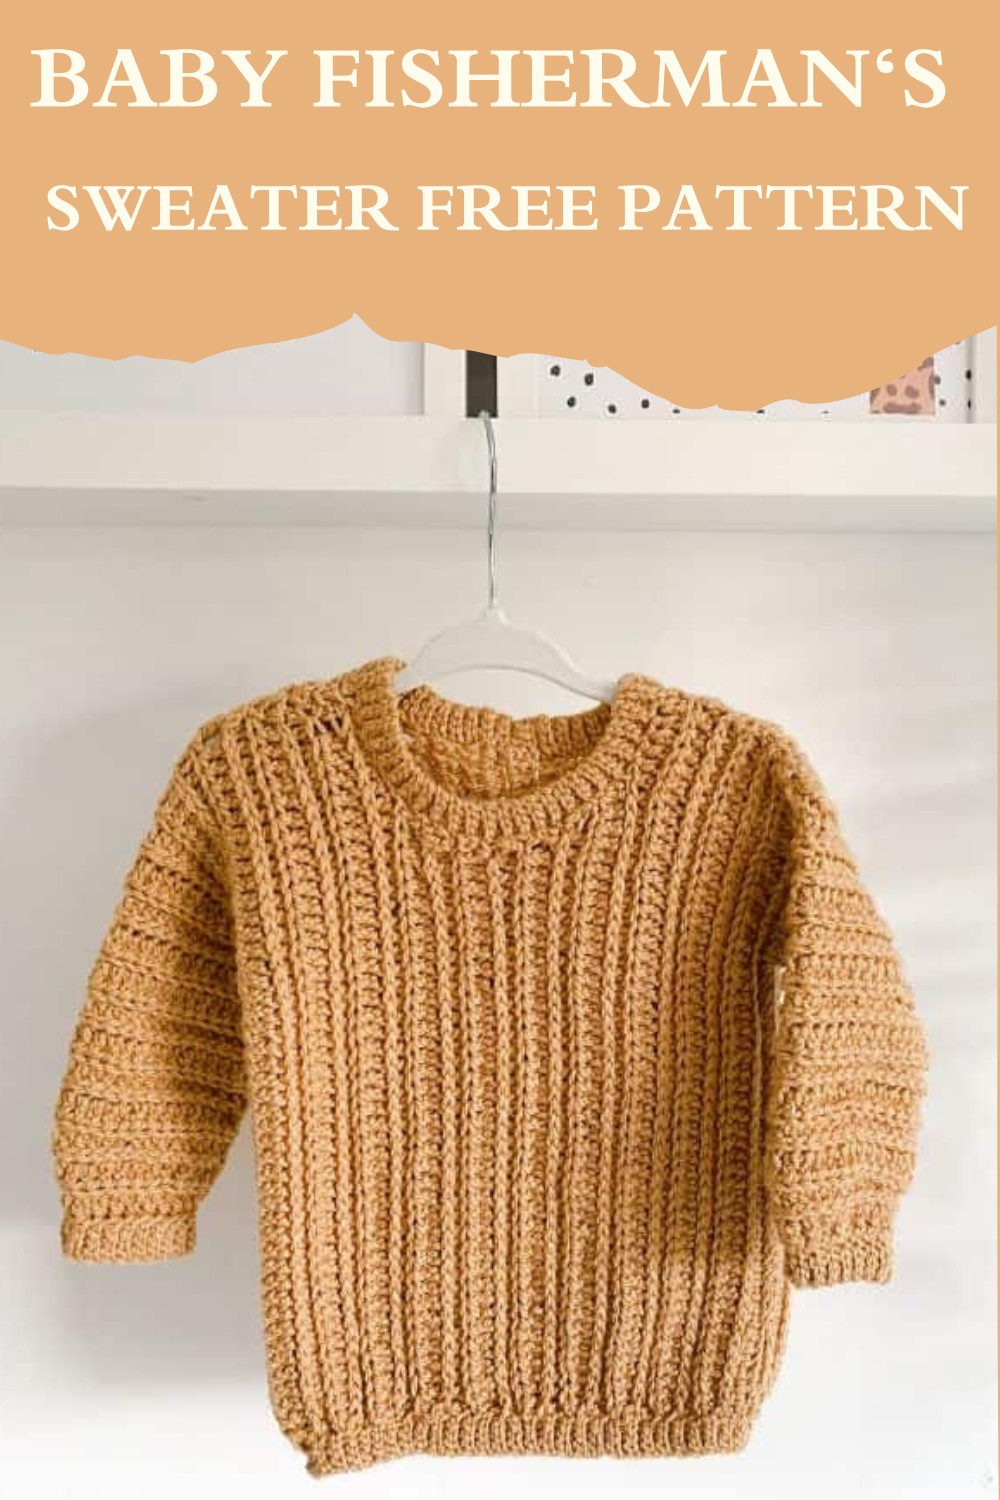 Baby Fisherman’s Sweater Free Pattern